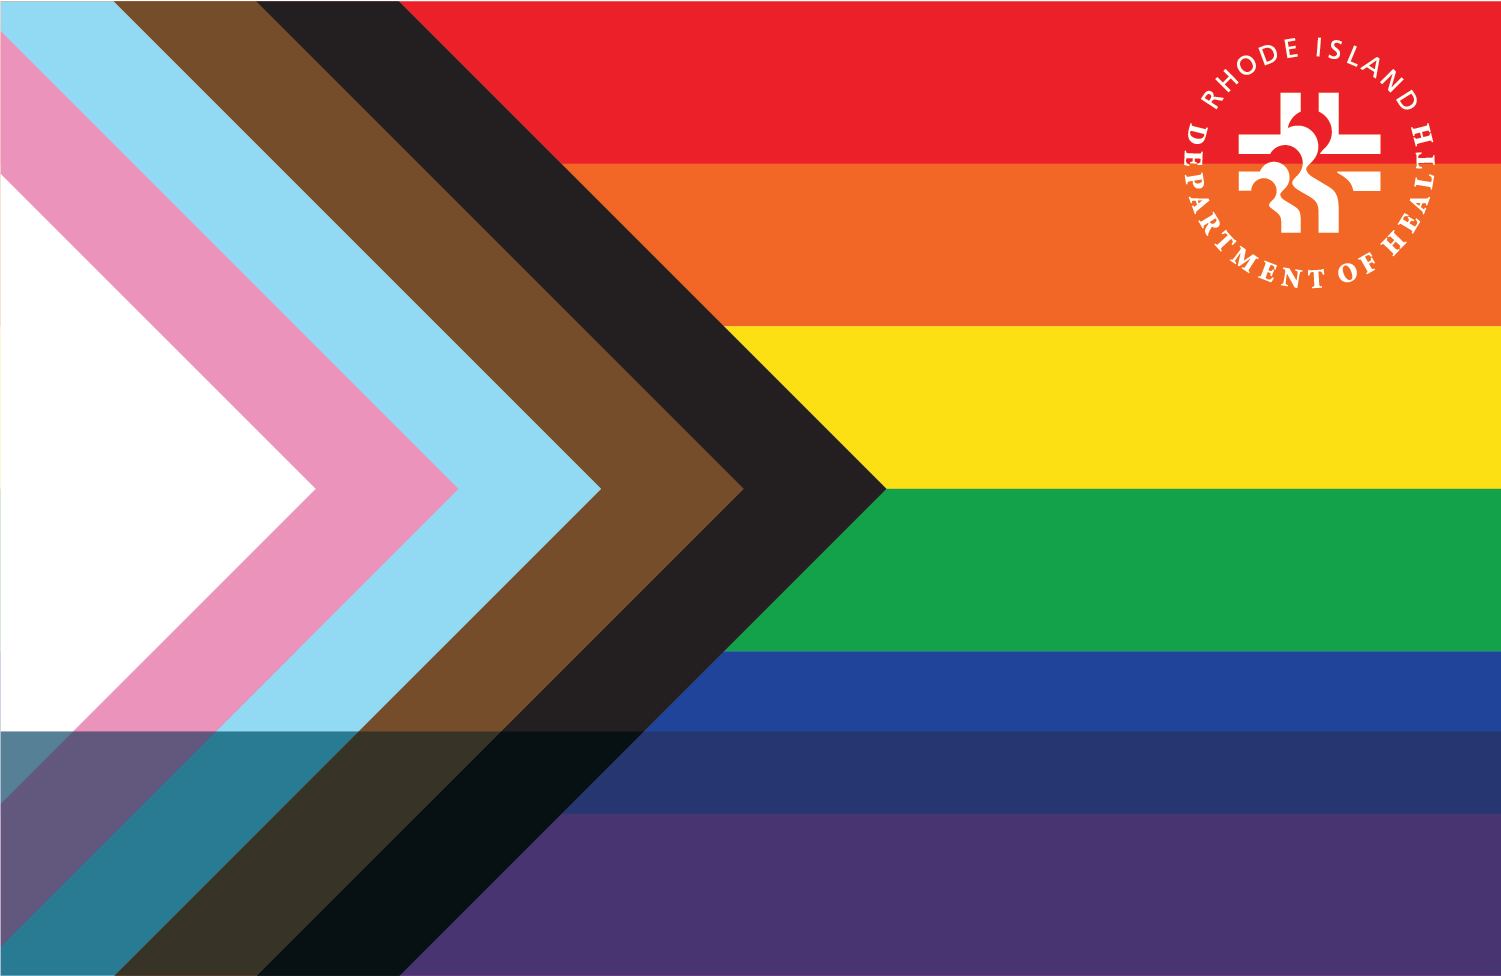 Pride banner